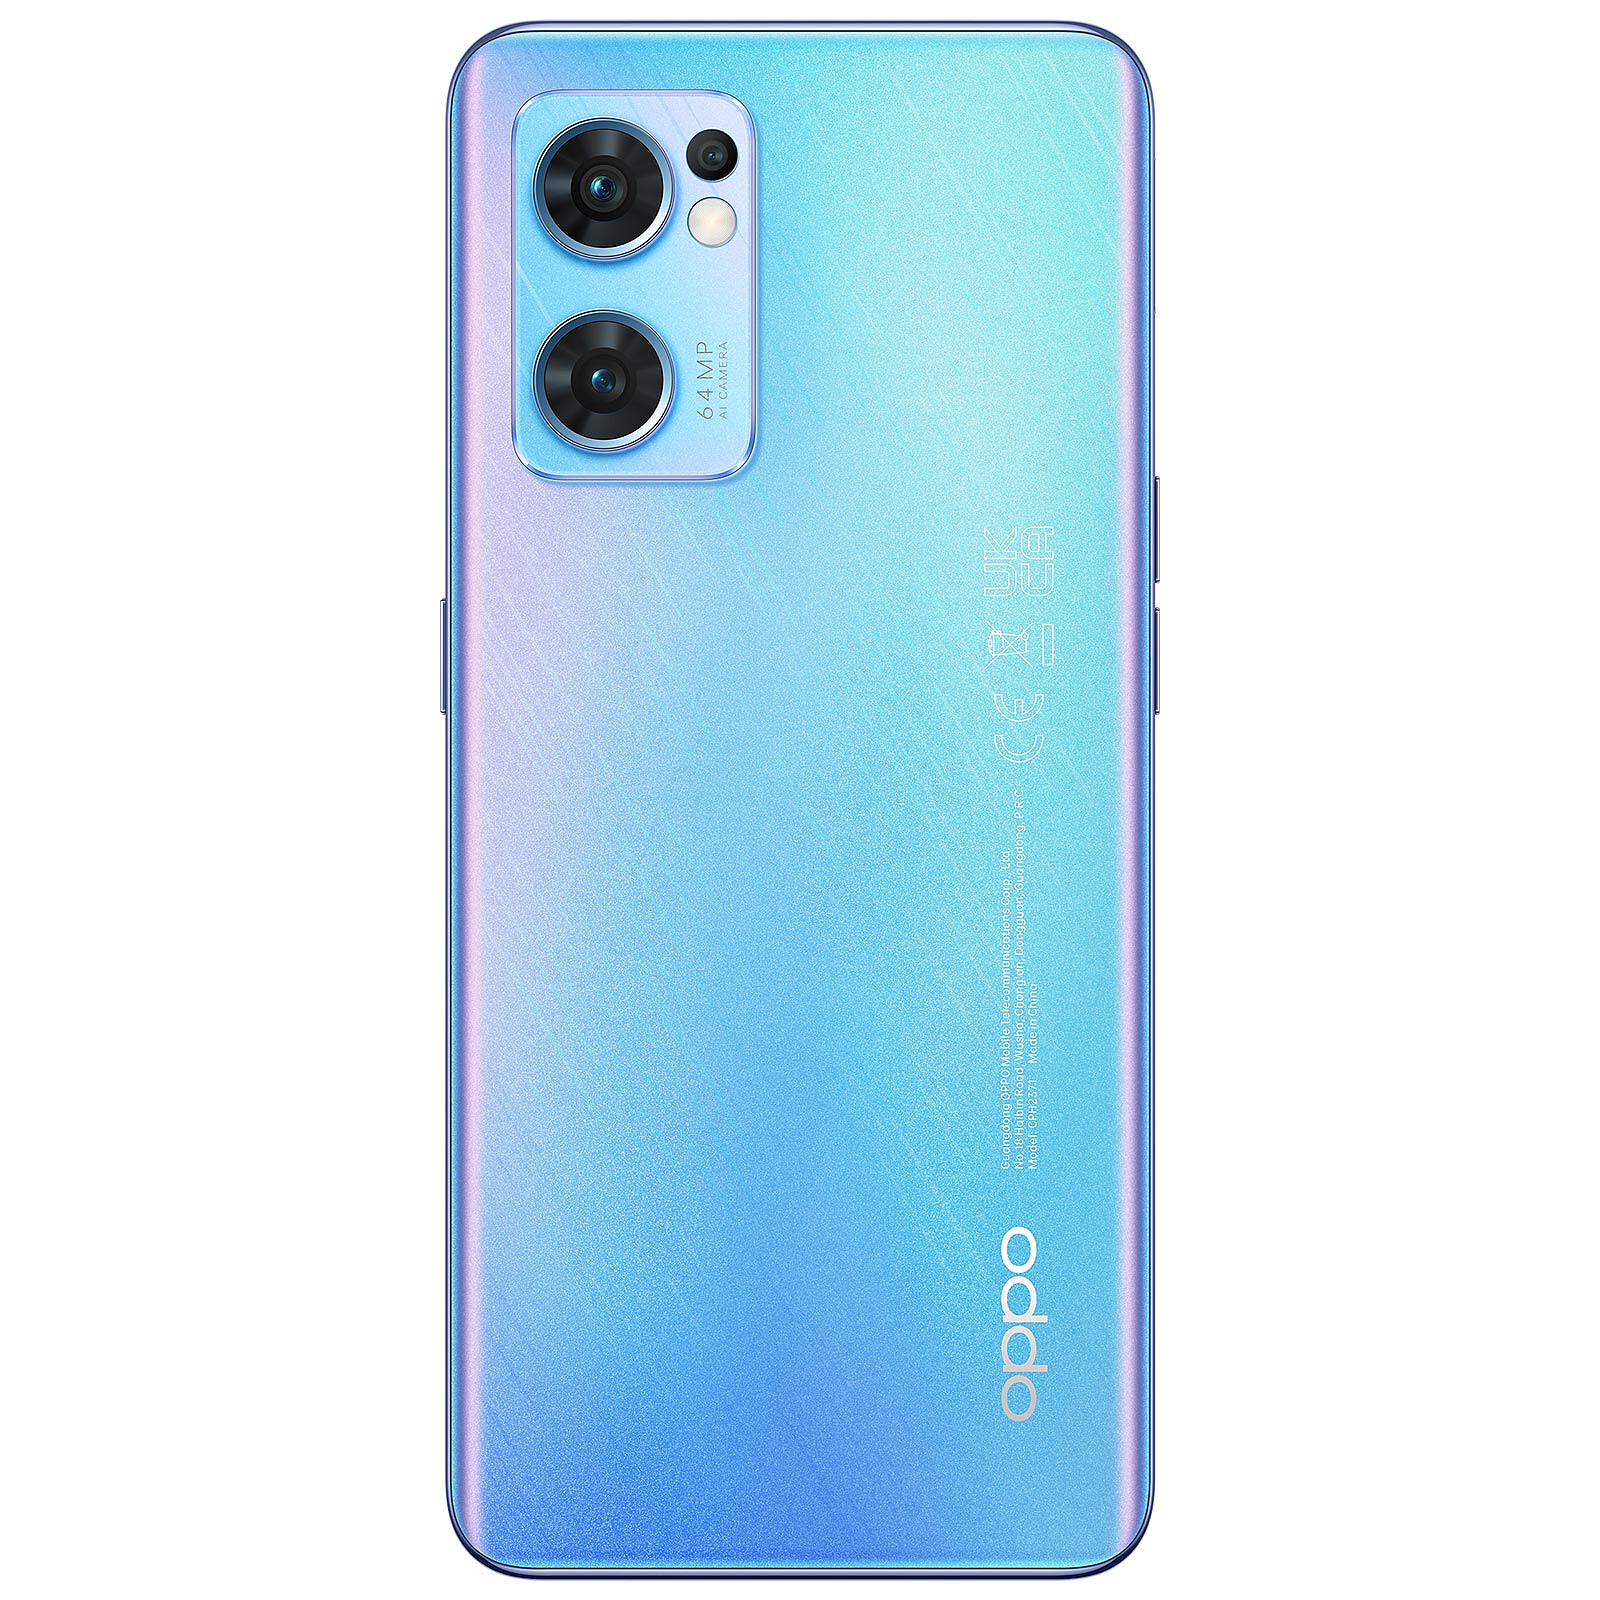  OPPO Find X5 Lite Dual-SIM 256GB ROM + 8GB RAM (GSM Only  No  CDMA) Factory Unlocked 5G Smartphone (Startrails Blue) - International  Version